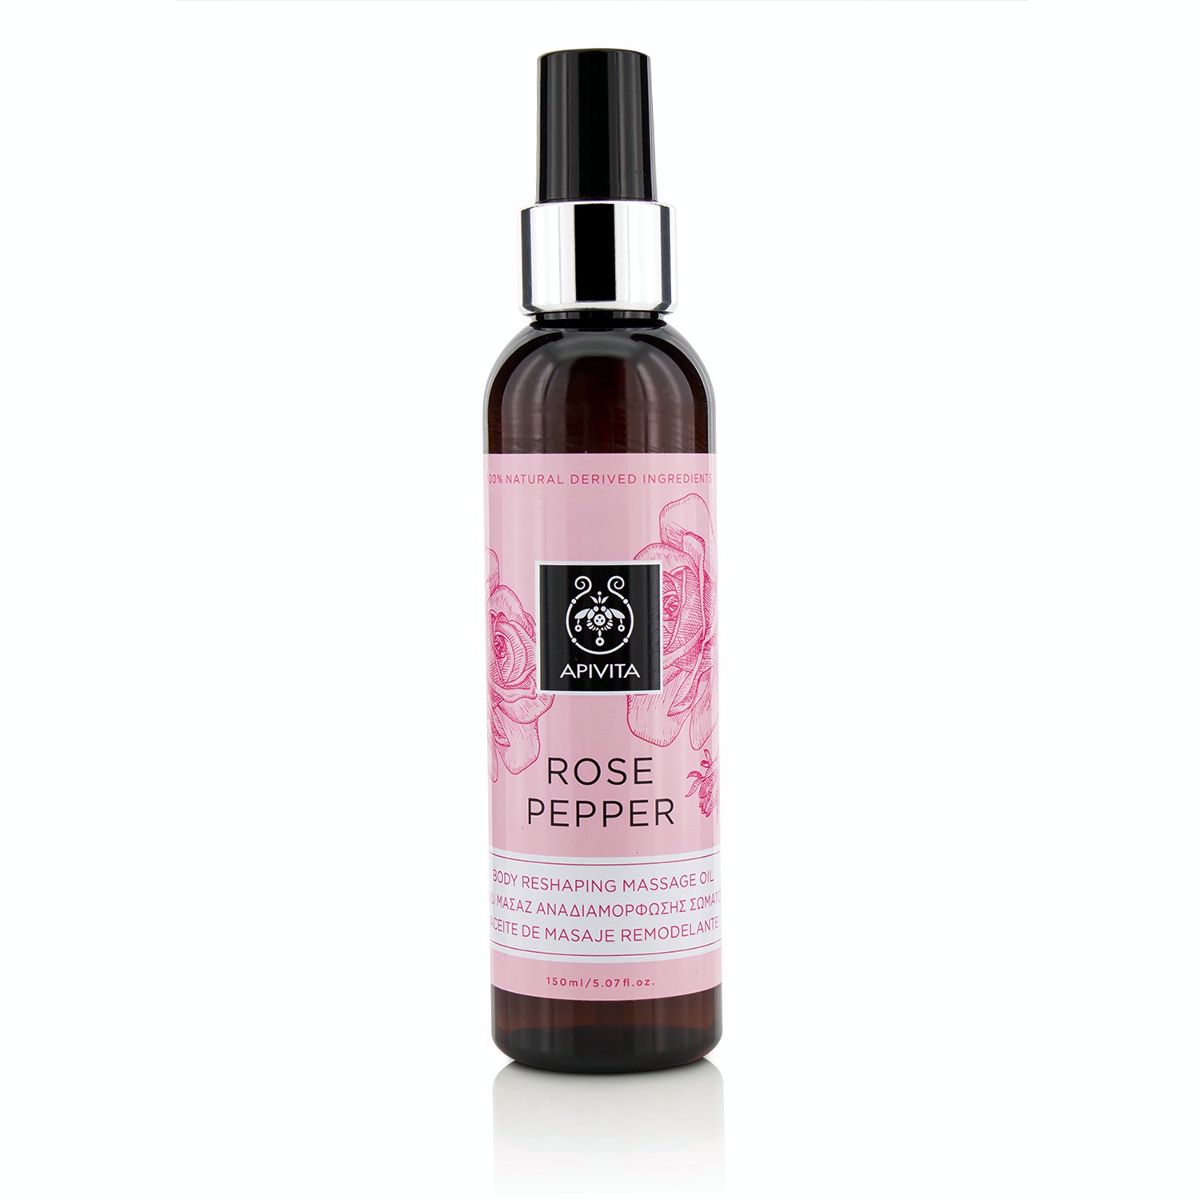 Rose Pepper Body Reshaping Massage Oil Apivita Image